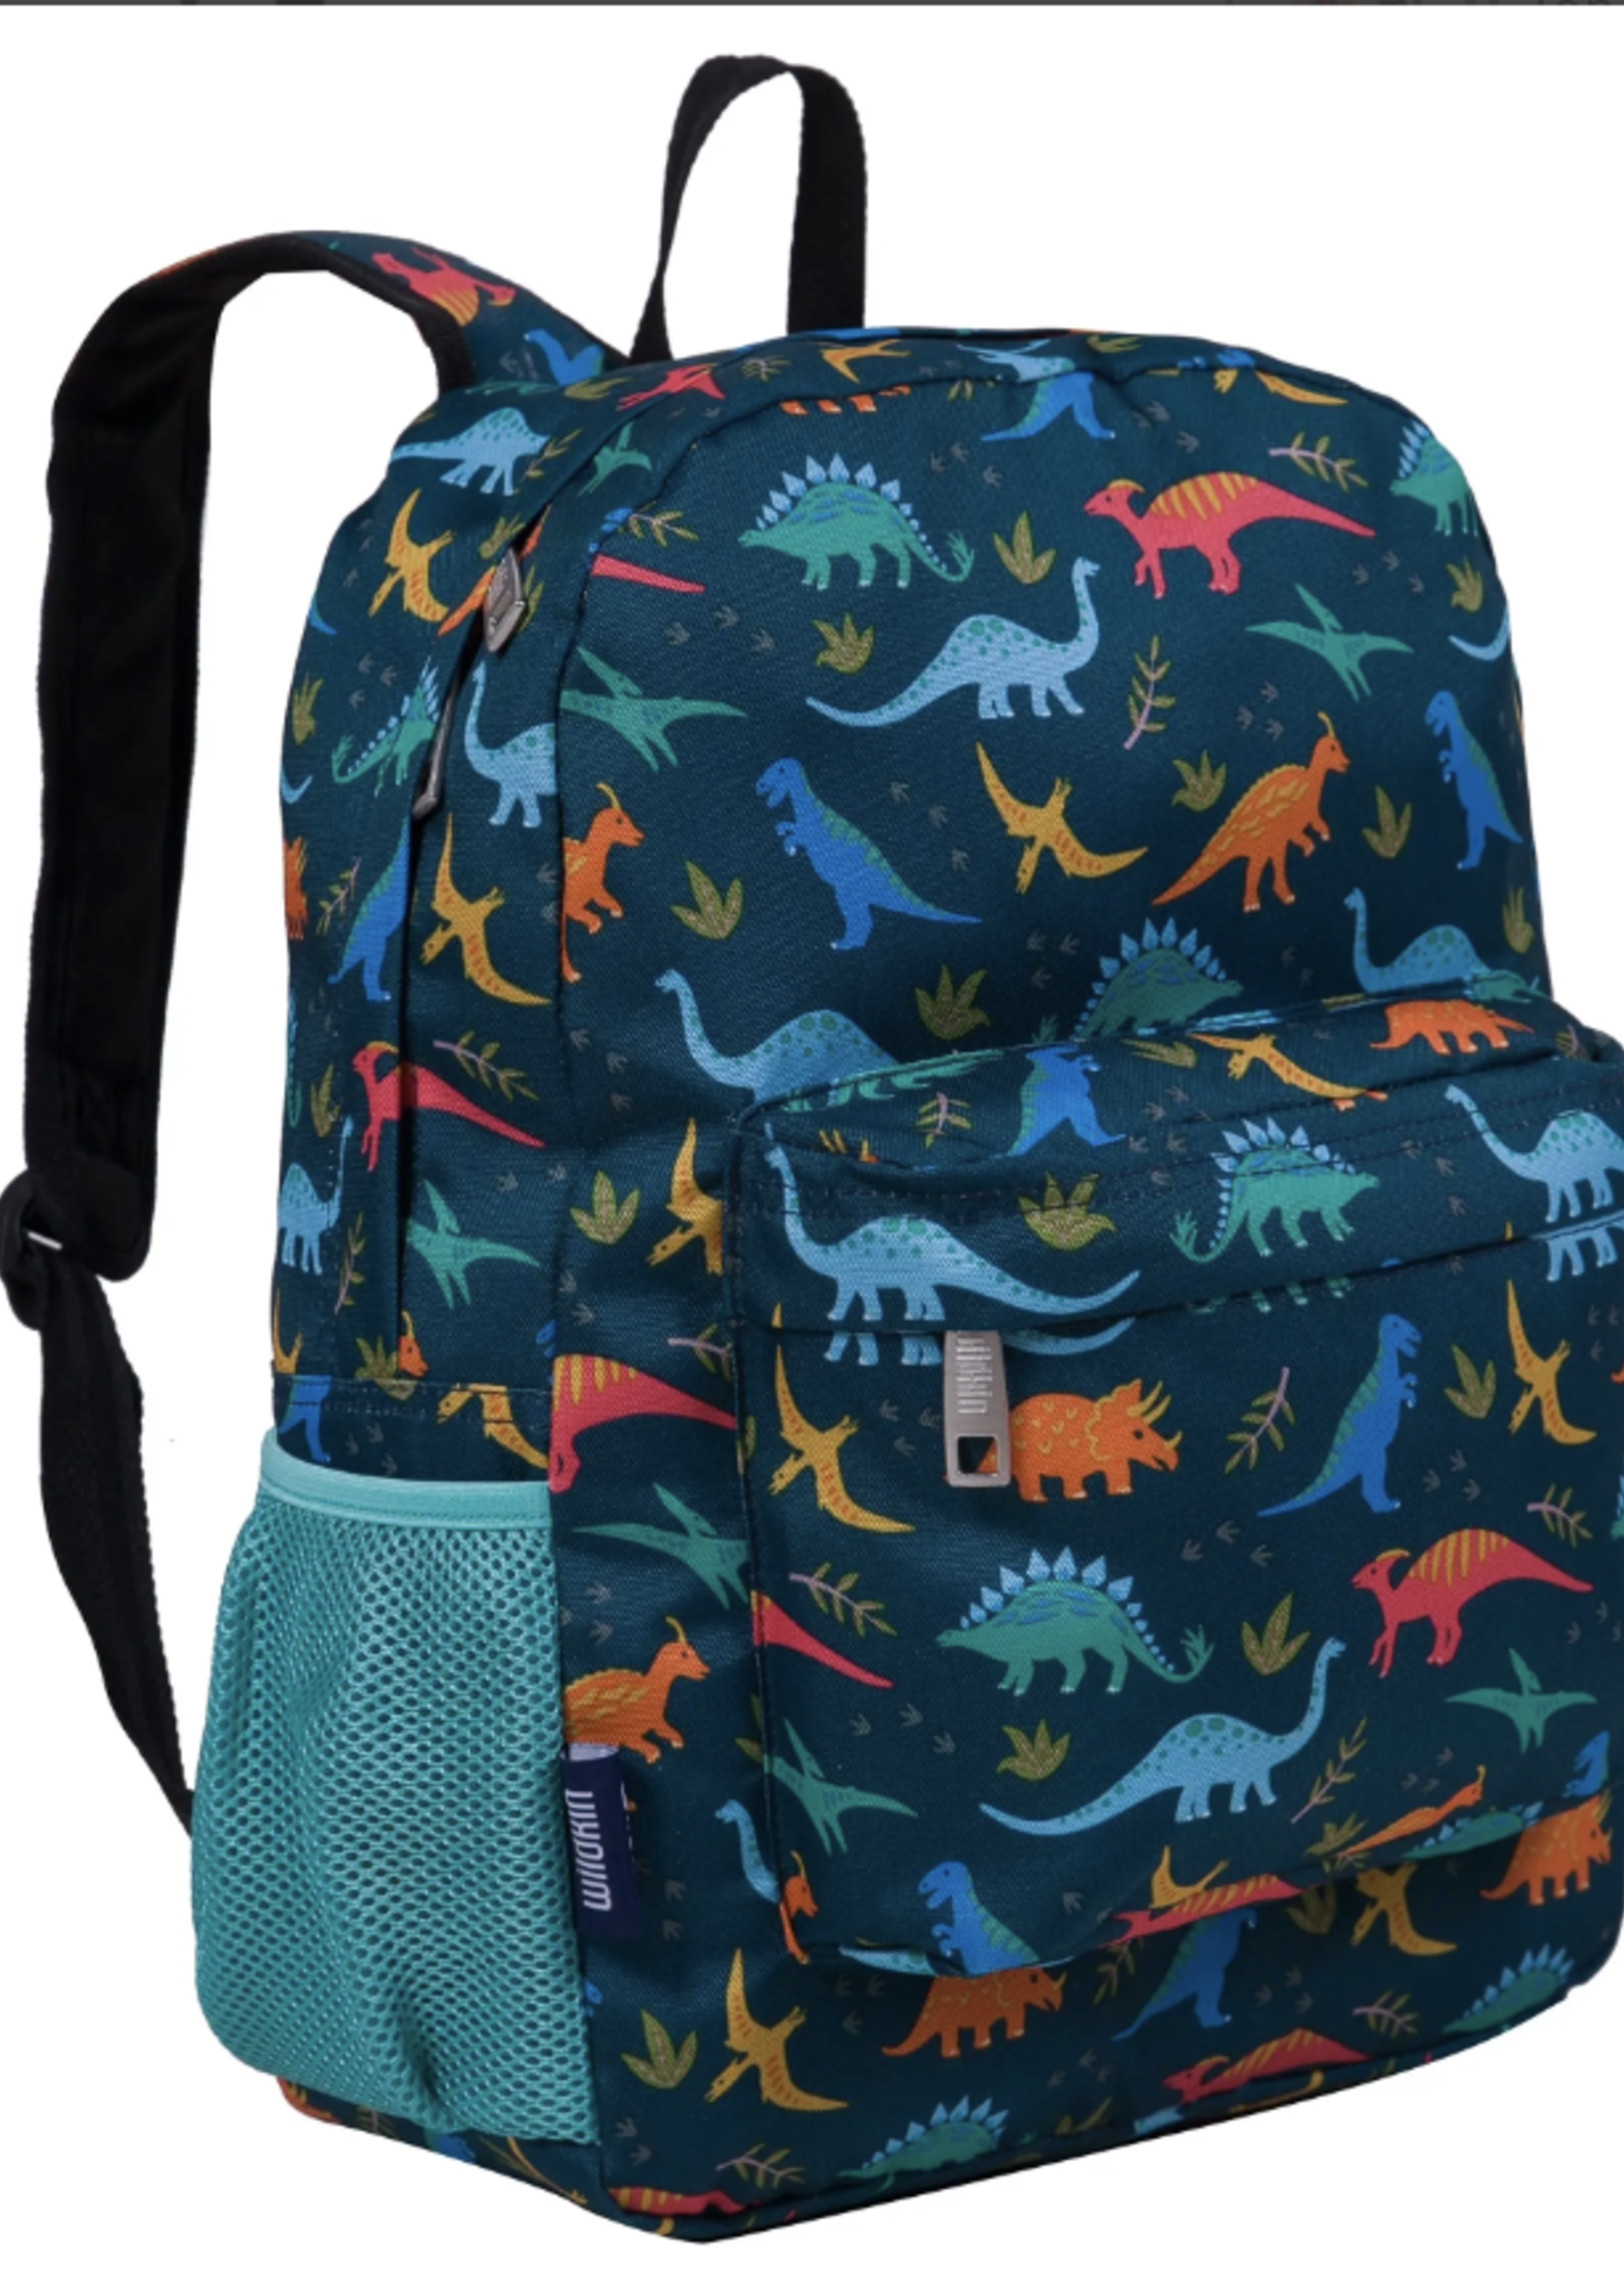 Wildkin 16 Inch Backpack